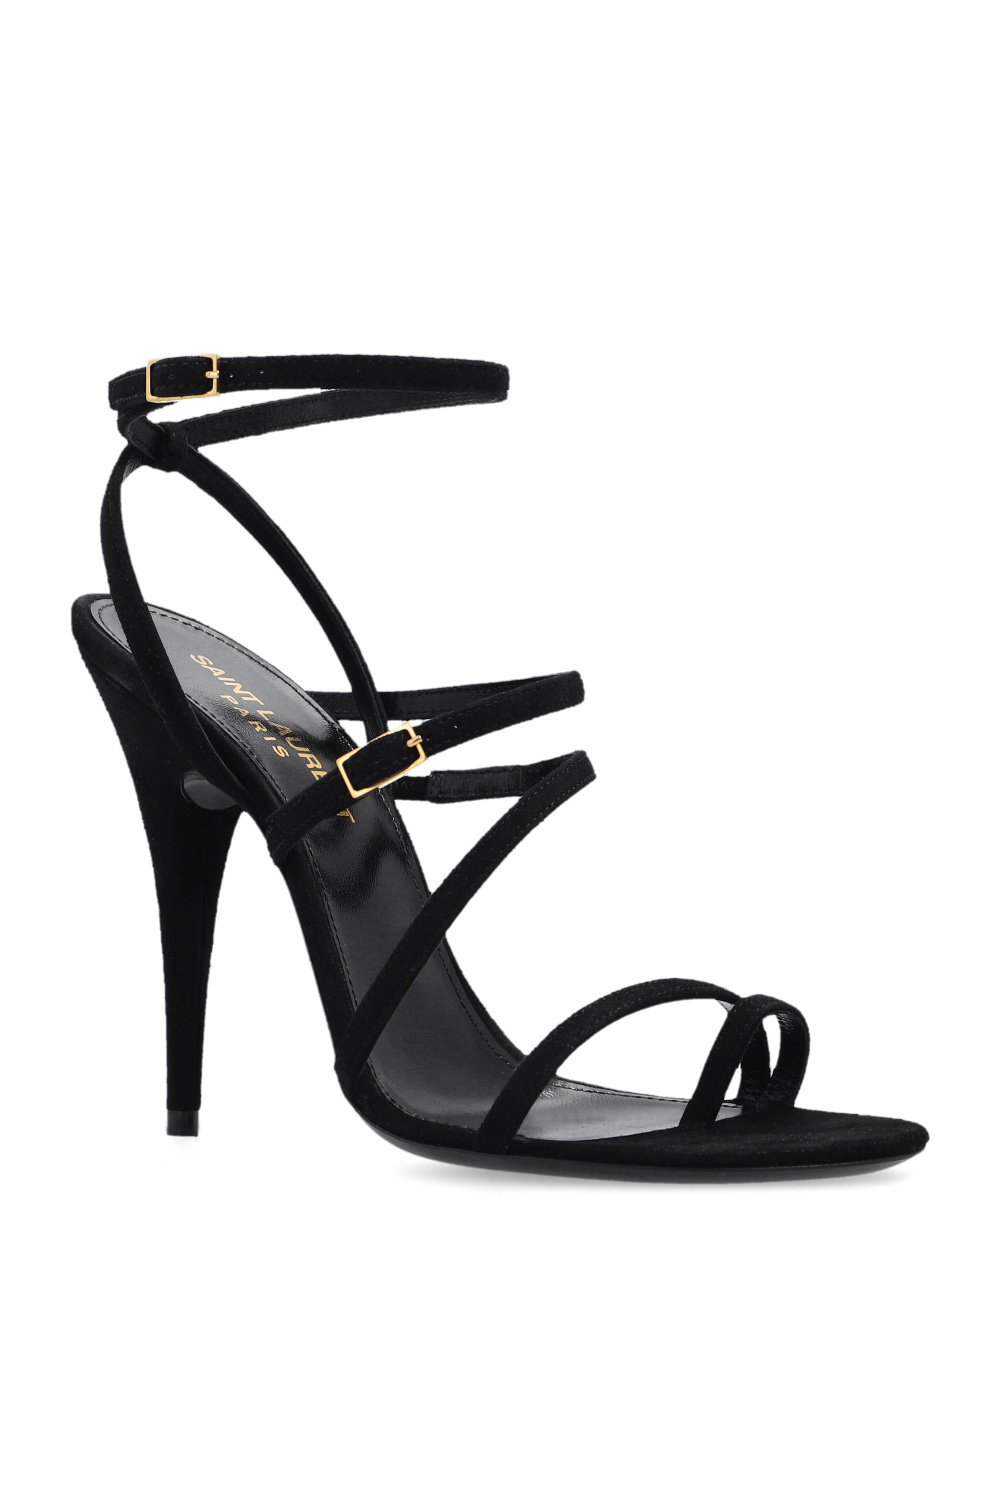 Saint Laurent ‘Bellini’ heeled sandals